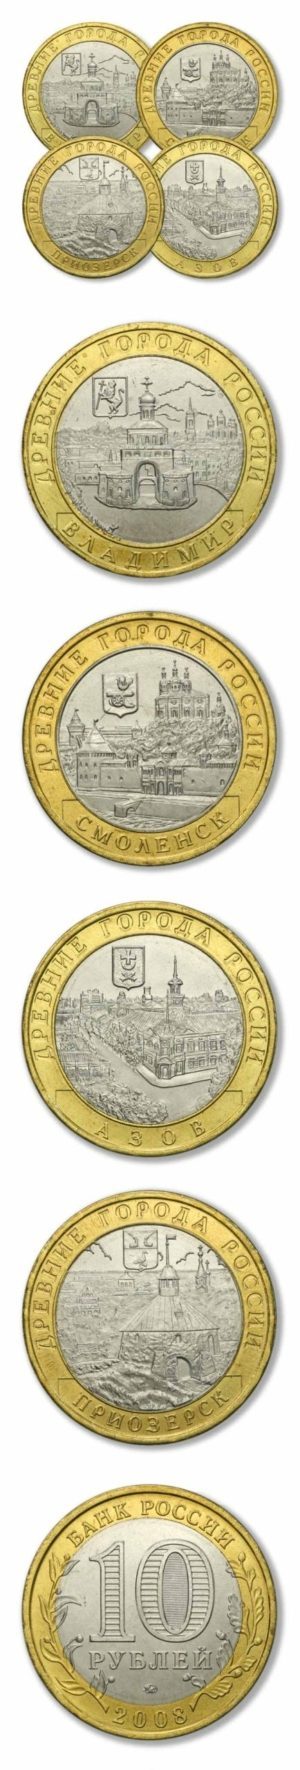 Russia - Ancient Cities Series - 10 Roubles - c - Bimetallic (4) Coin Set - Brilliant Uncirculated